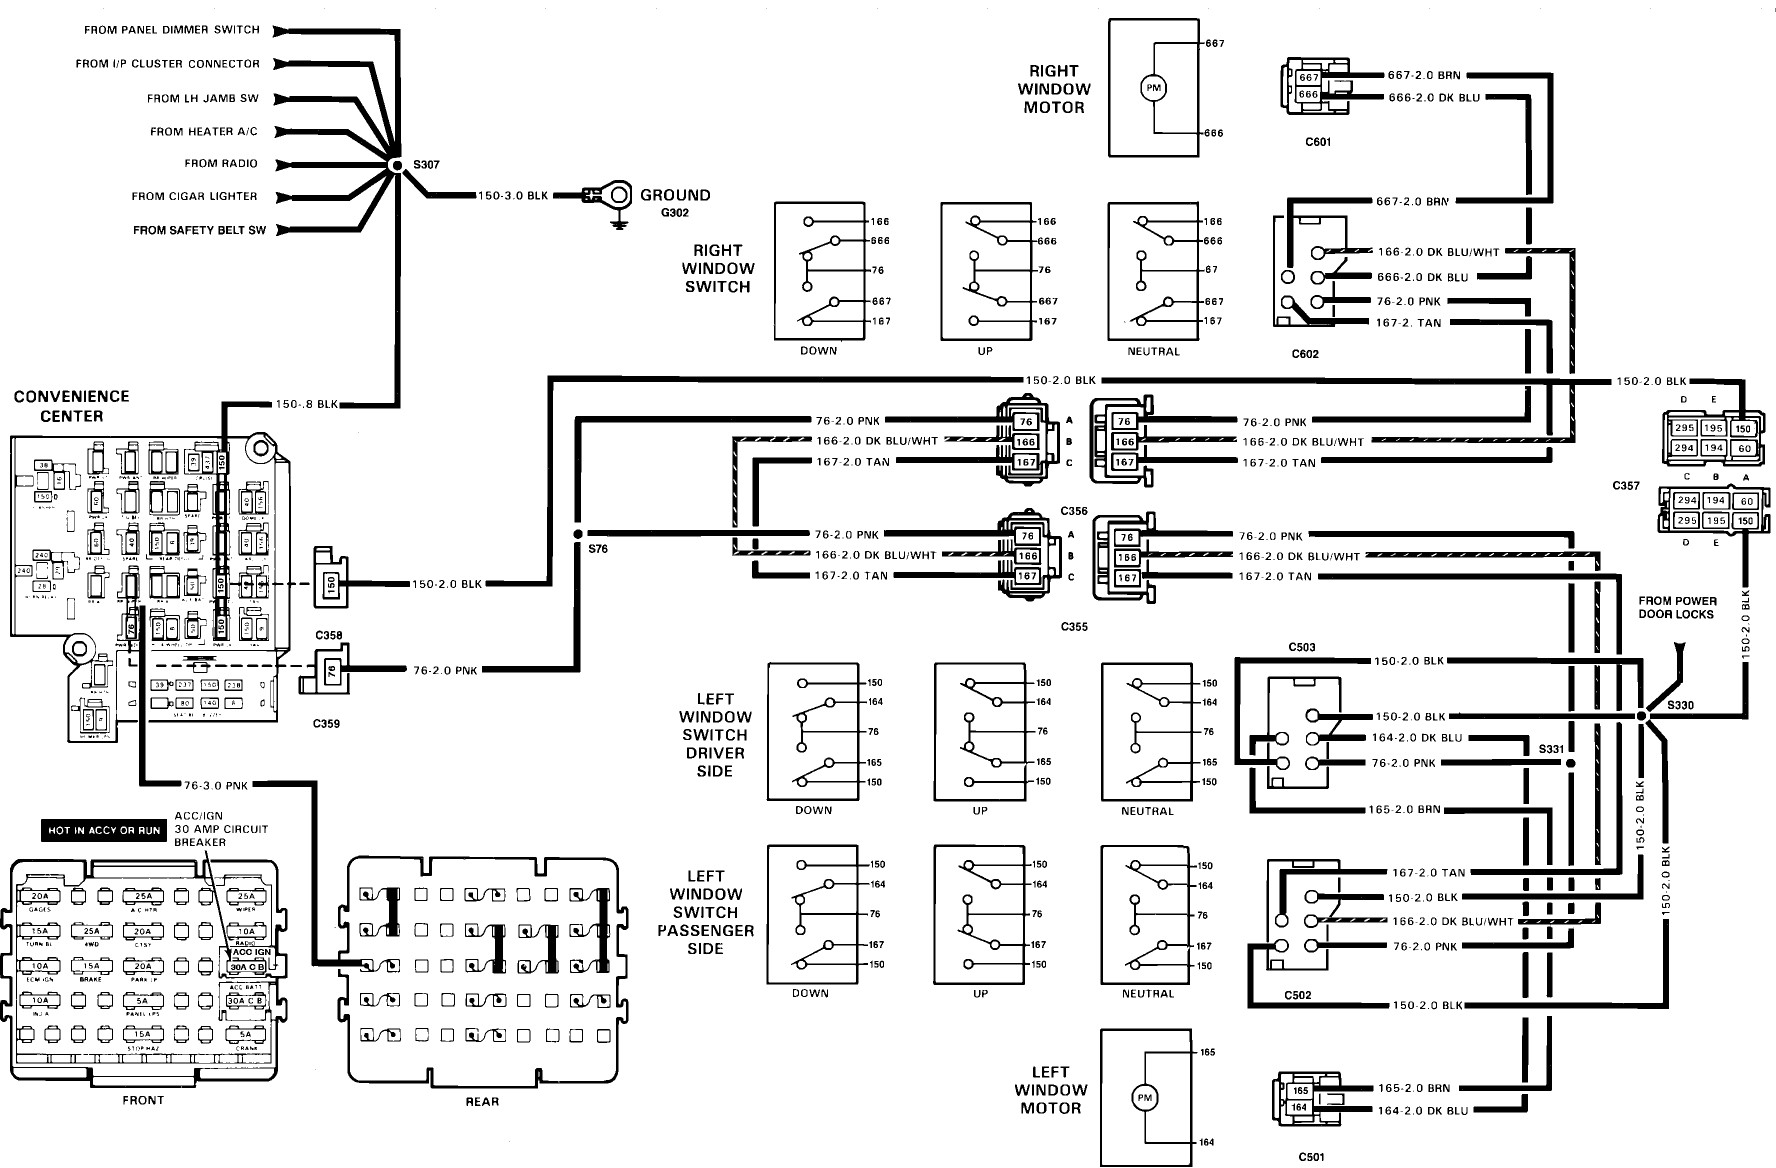 Chevy Silverado Parts Diagram Suburban Parts Diagram Besides Gm Bulkhead Connector Wiring Diagram Of Chevy Silverado Parts Diagram